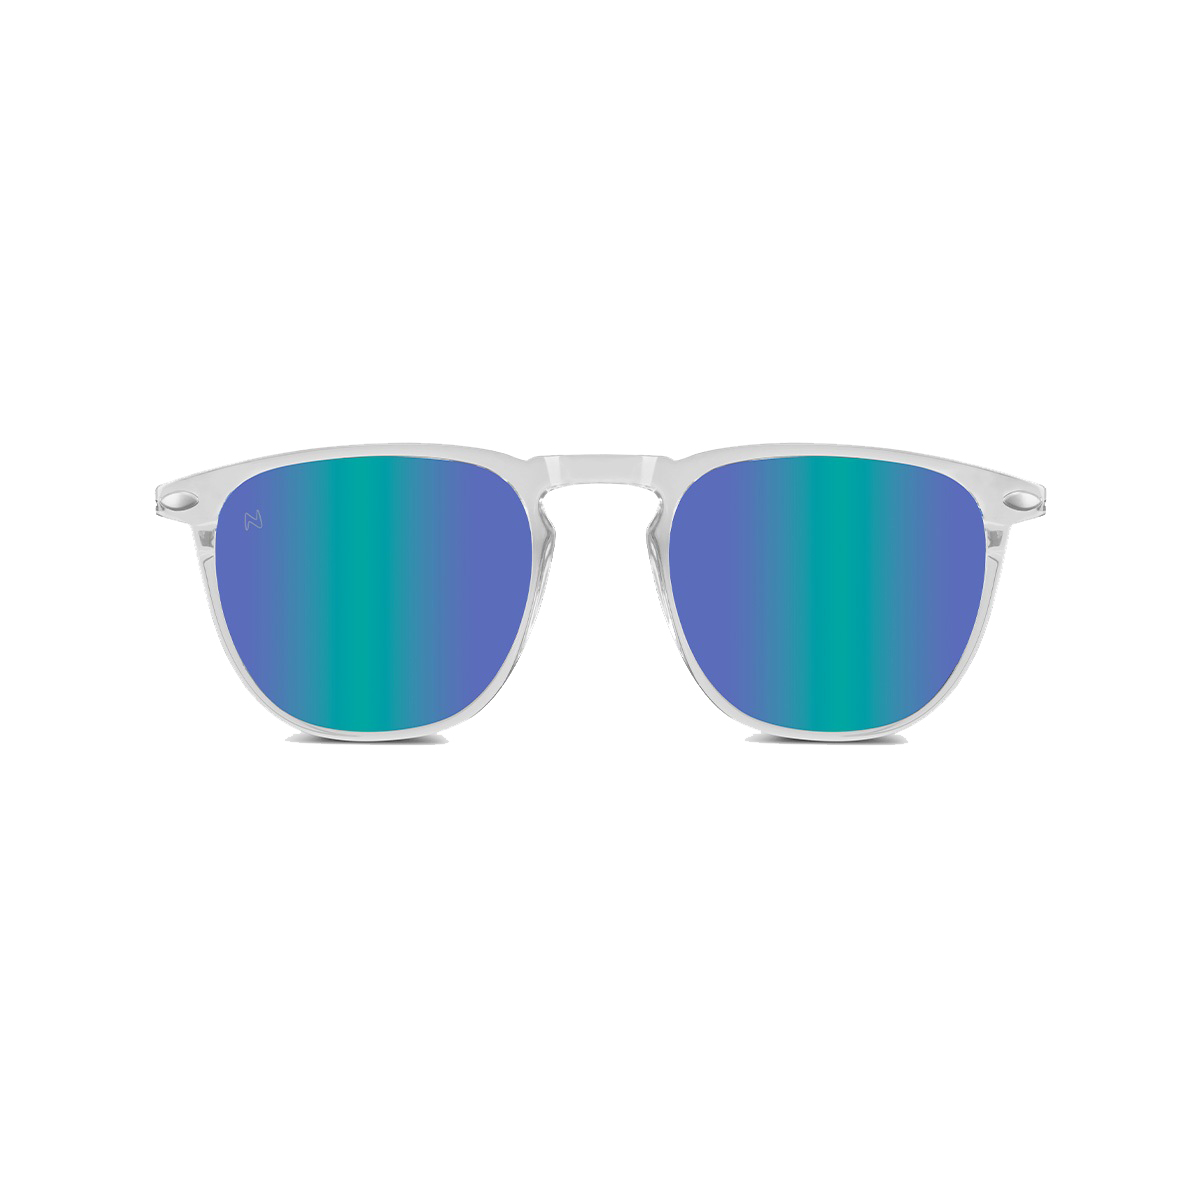 Nooz - Sunglasses - Dino - Crystal Mirror